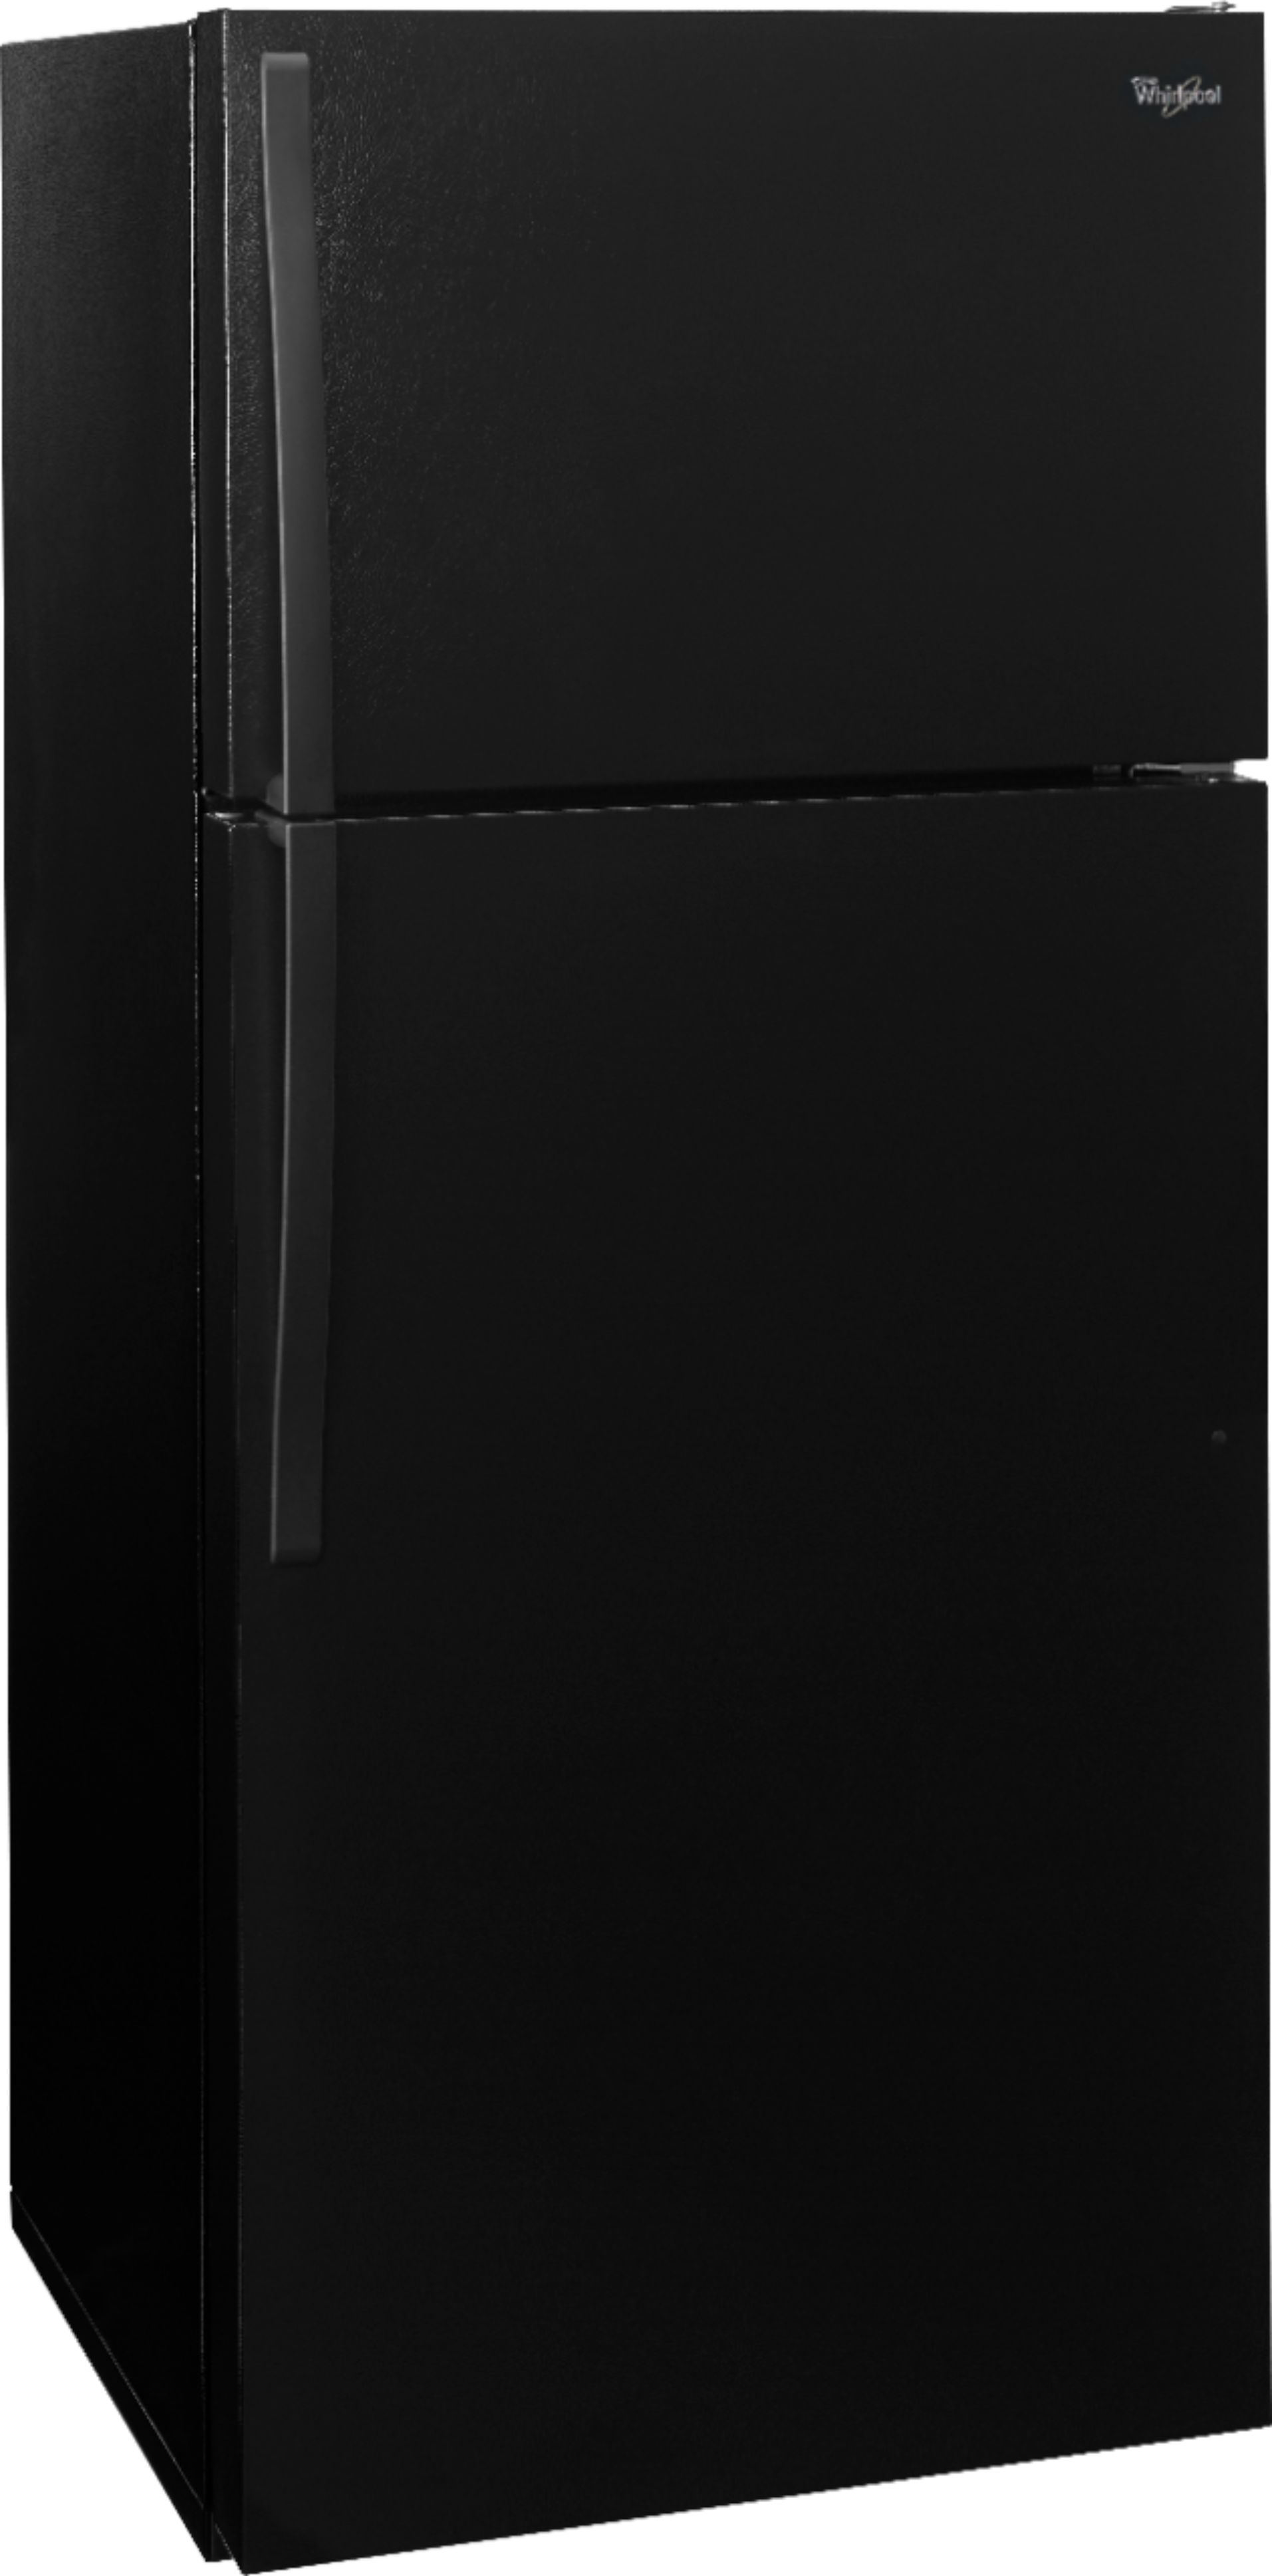 Angle View: Amana - 14.4 Cu. Ft. Top-Freezer Refrigerator with Dairy Bin - Black